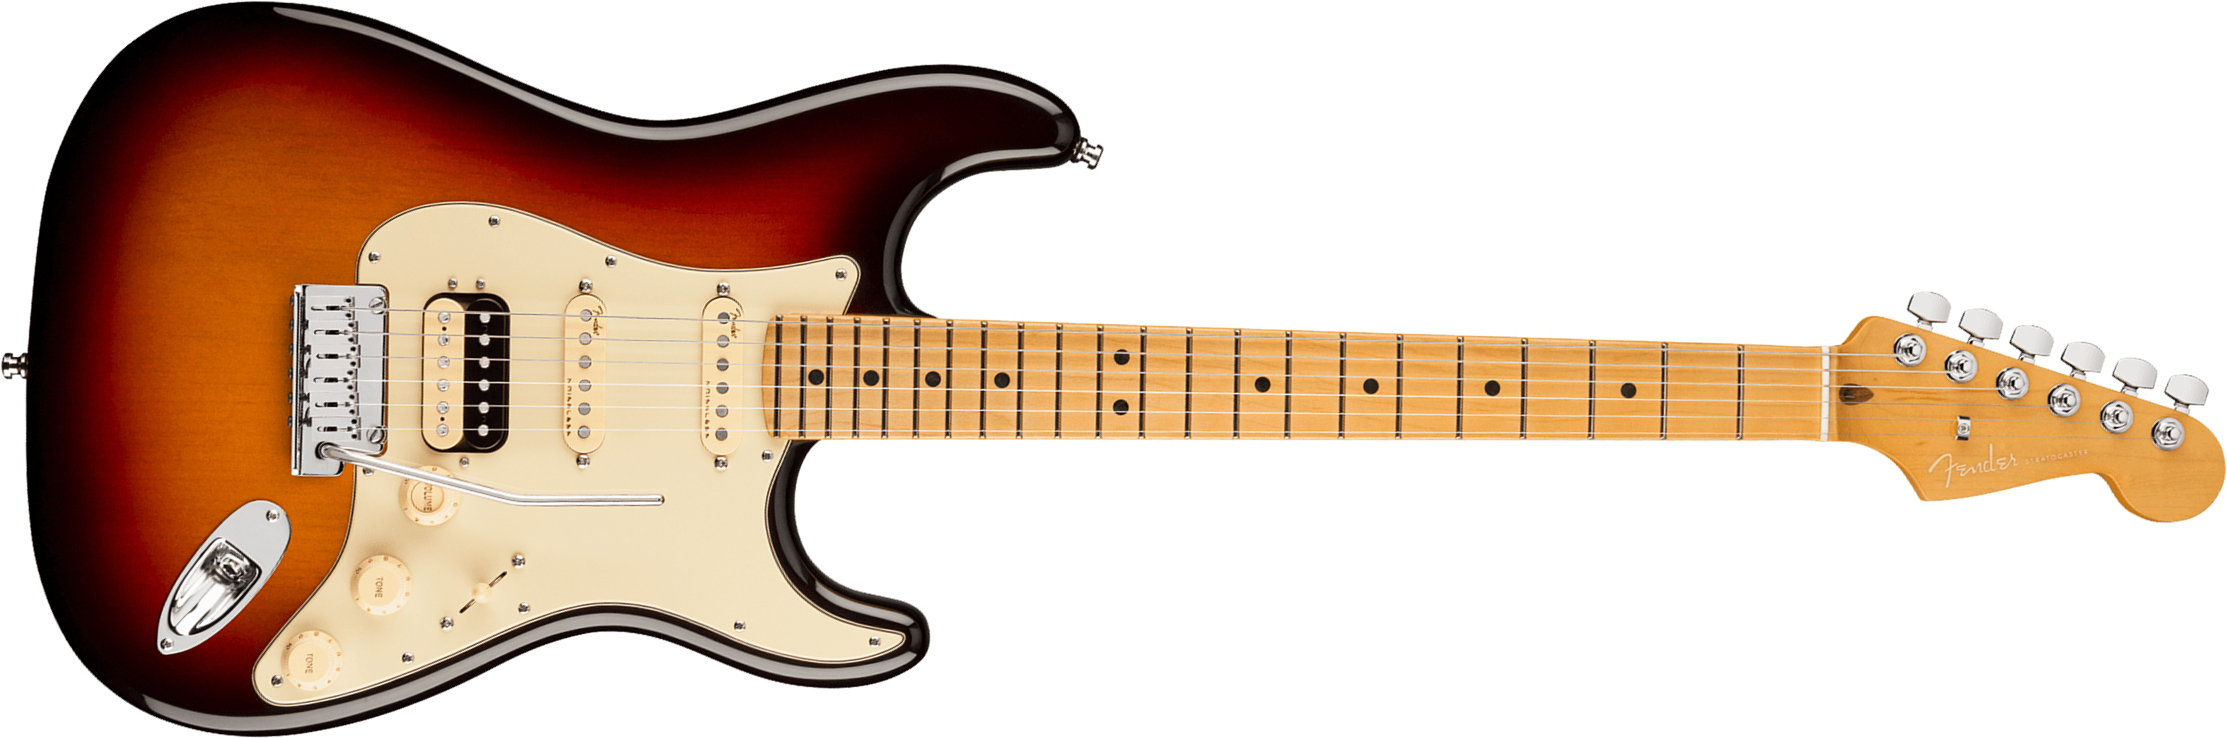 Fender Strat American Ultra Hss 2019 Usa Mn - Ultraburst - Str shape electric guitar - Main picture